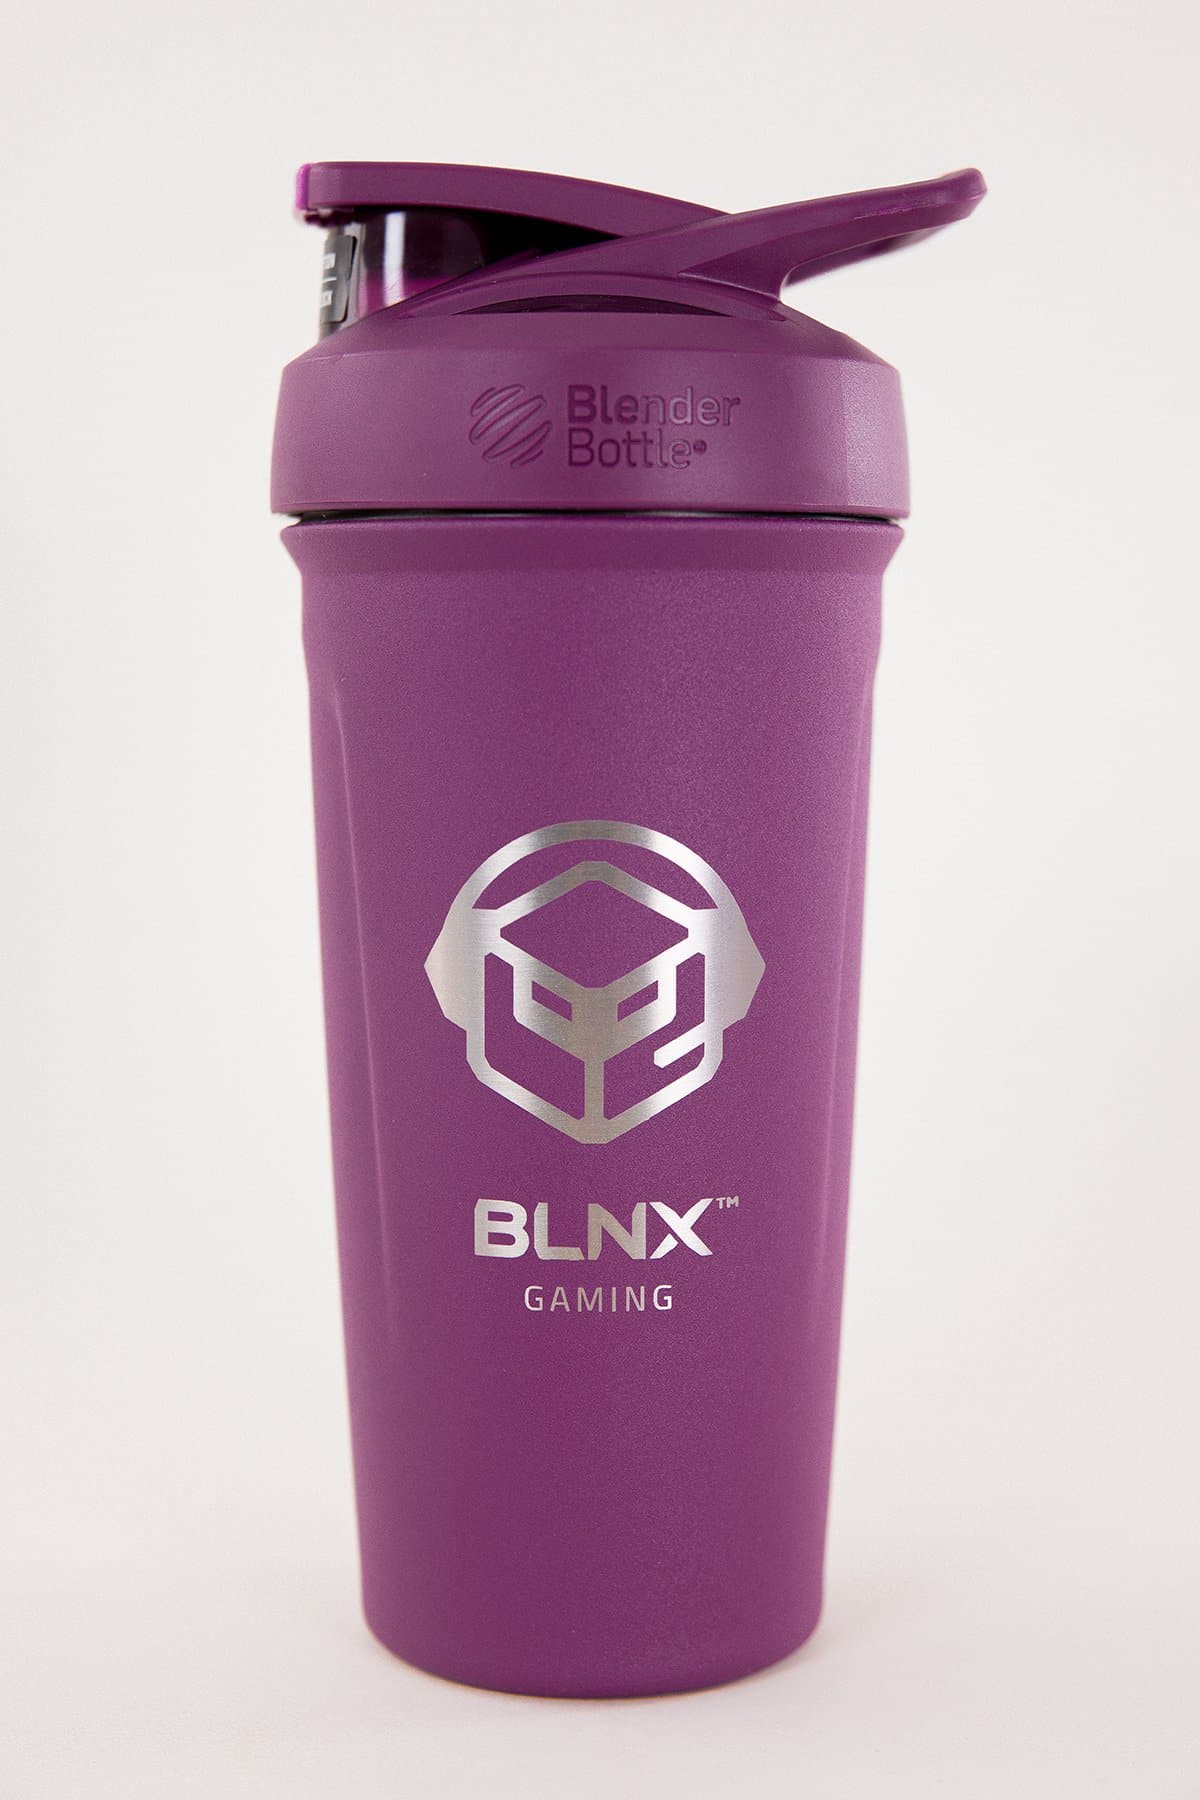 BLNX Box Blender Bottle – BLNX Gaming